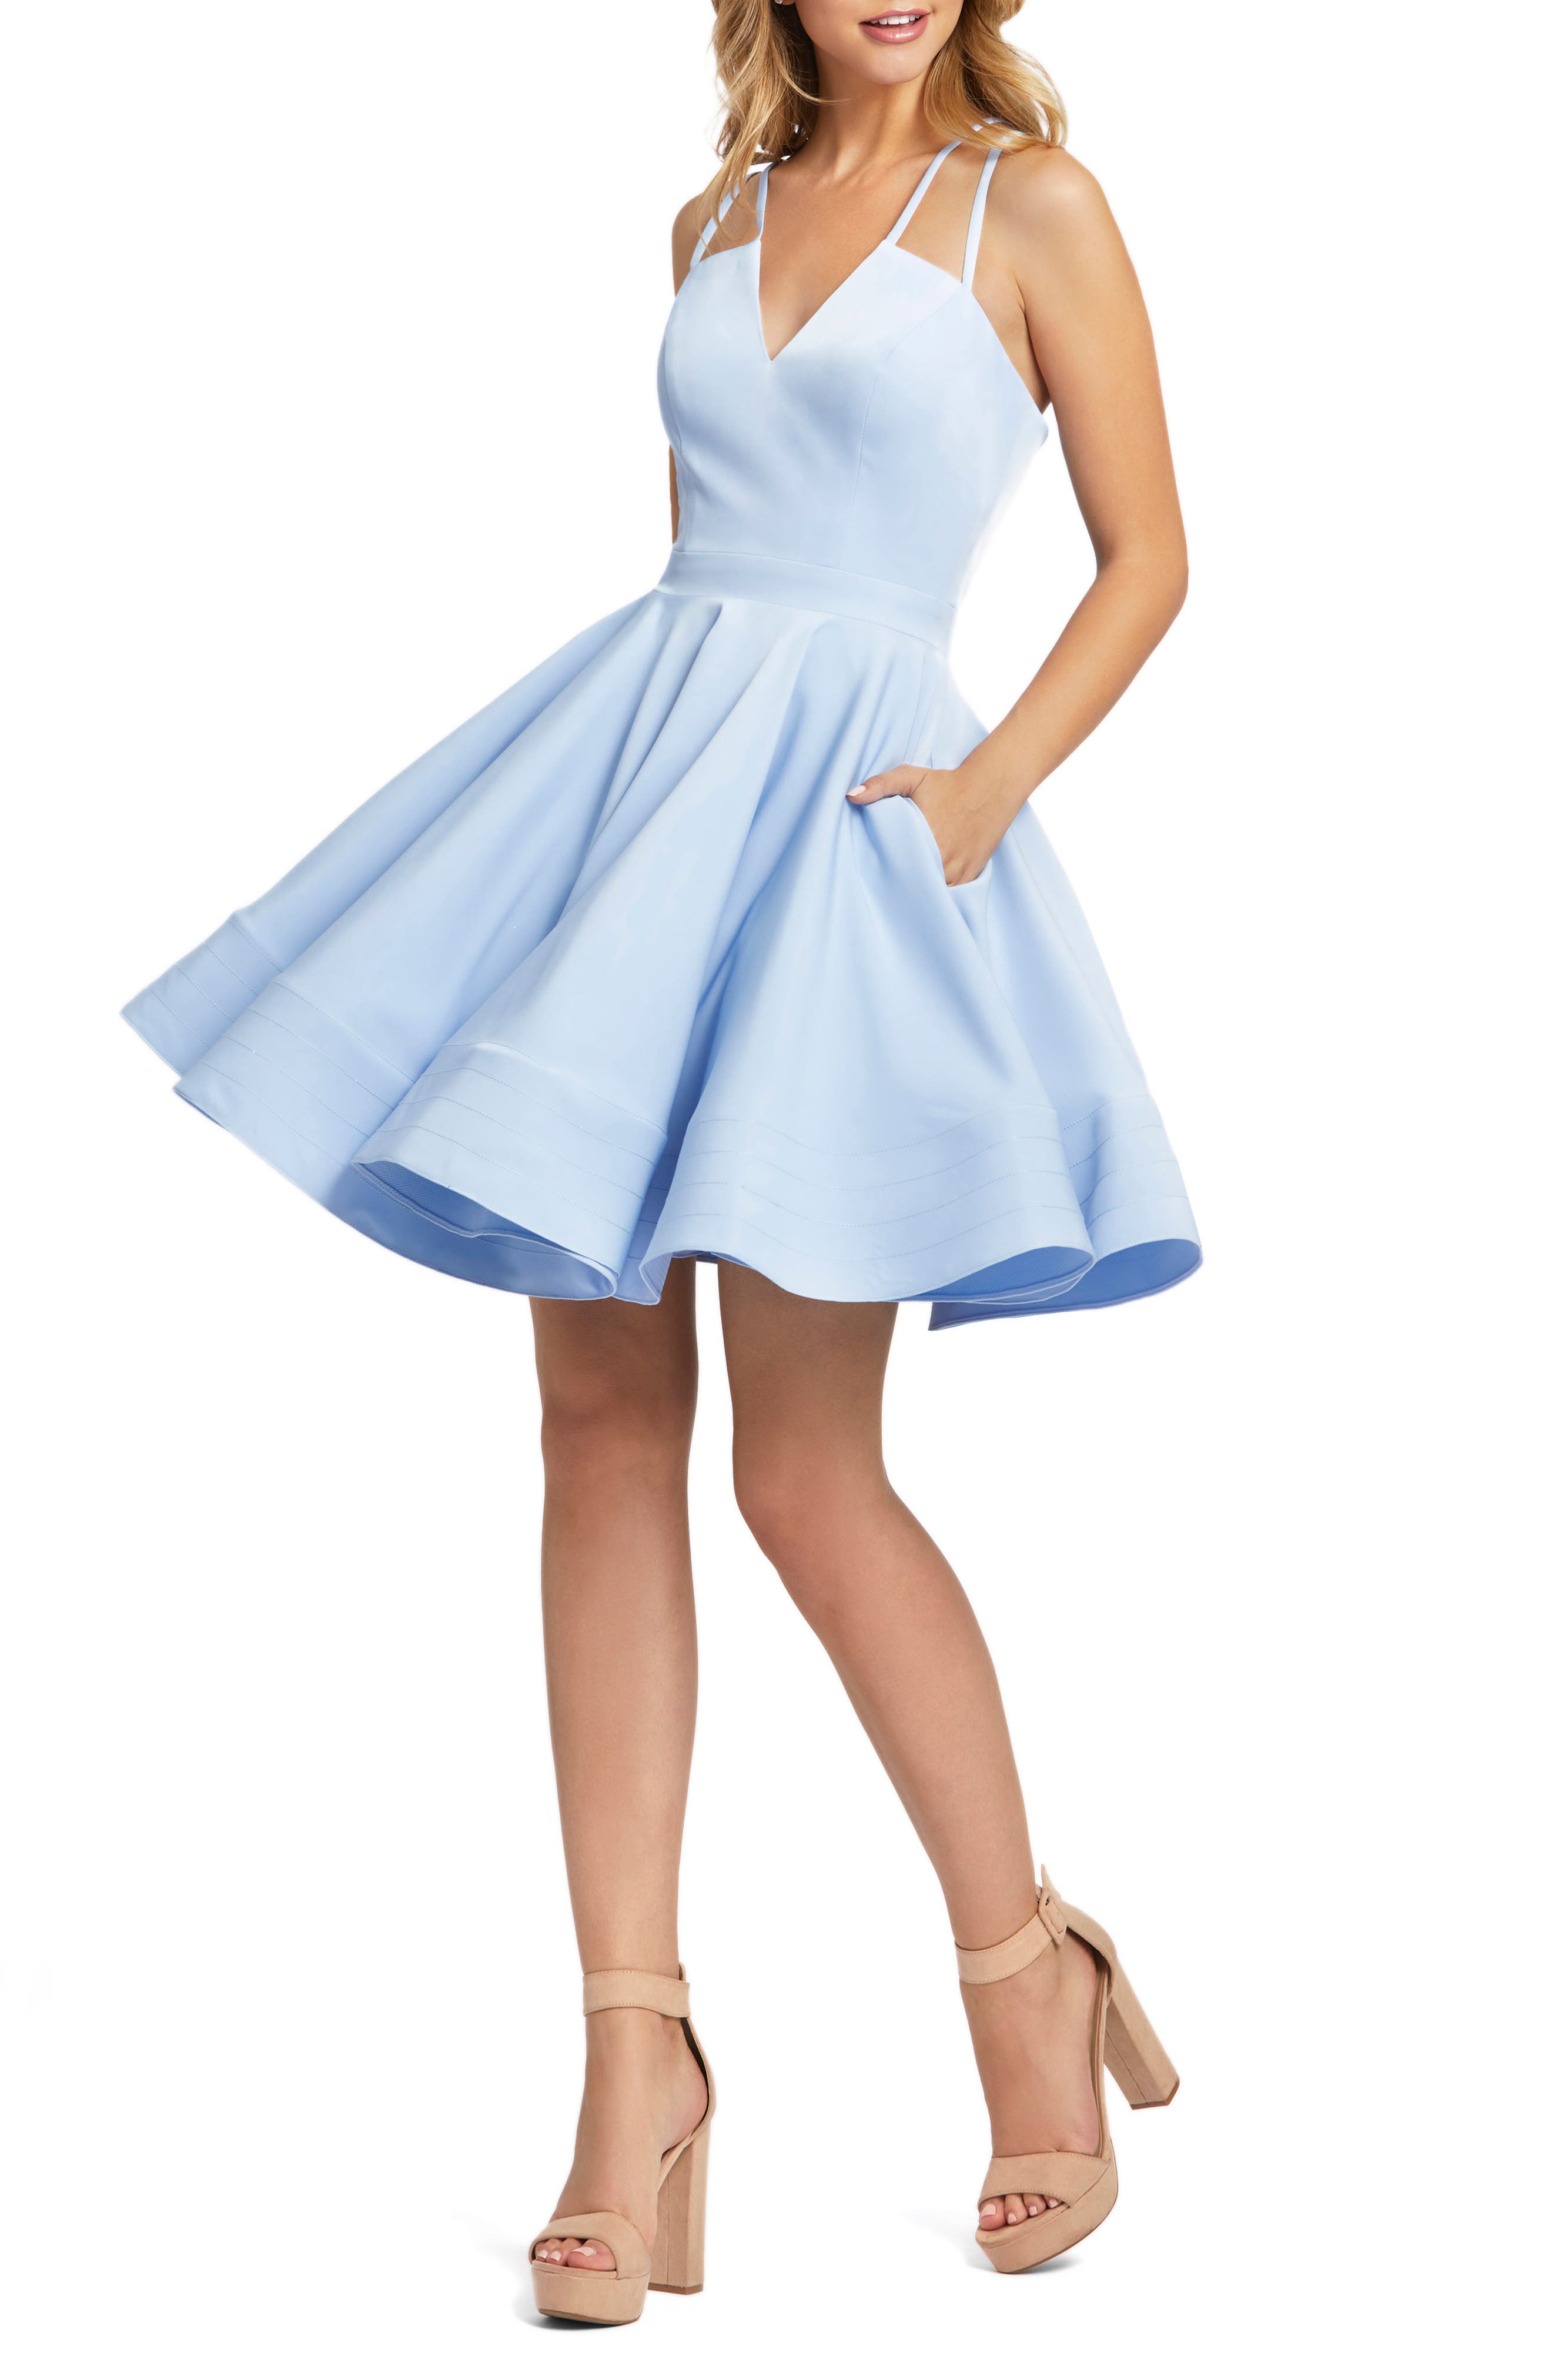 nordstrom blue prom dress